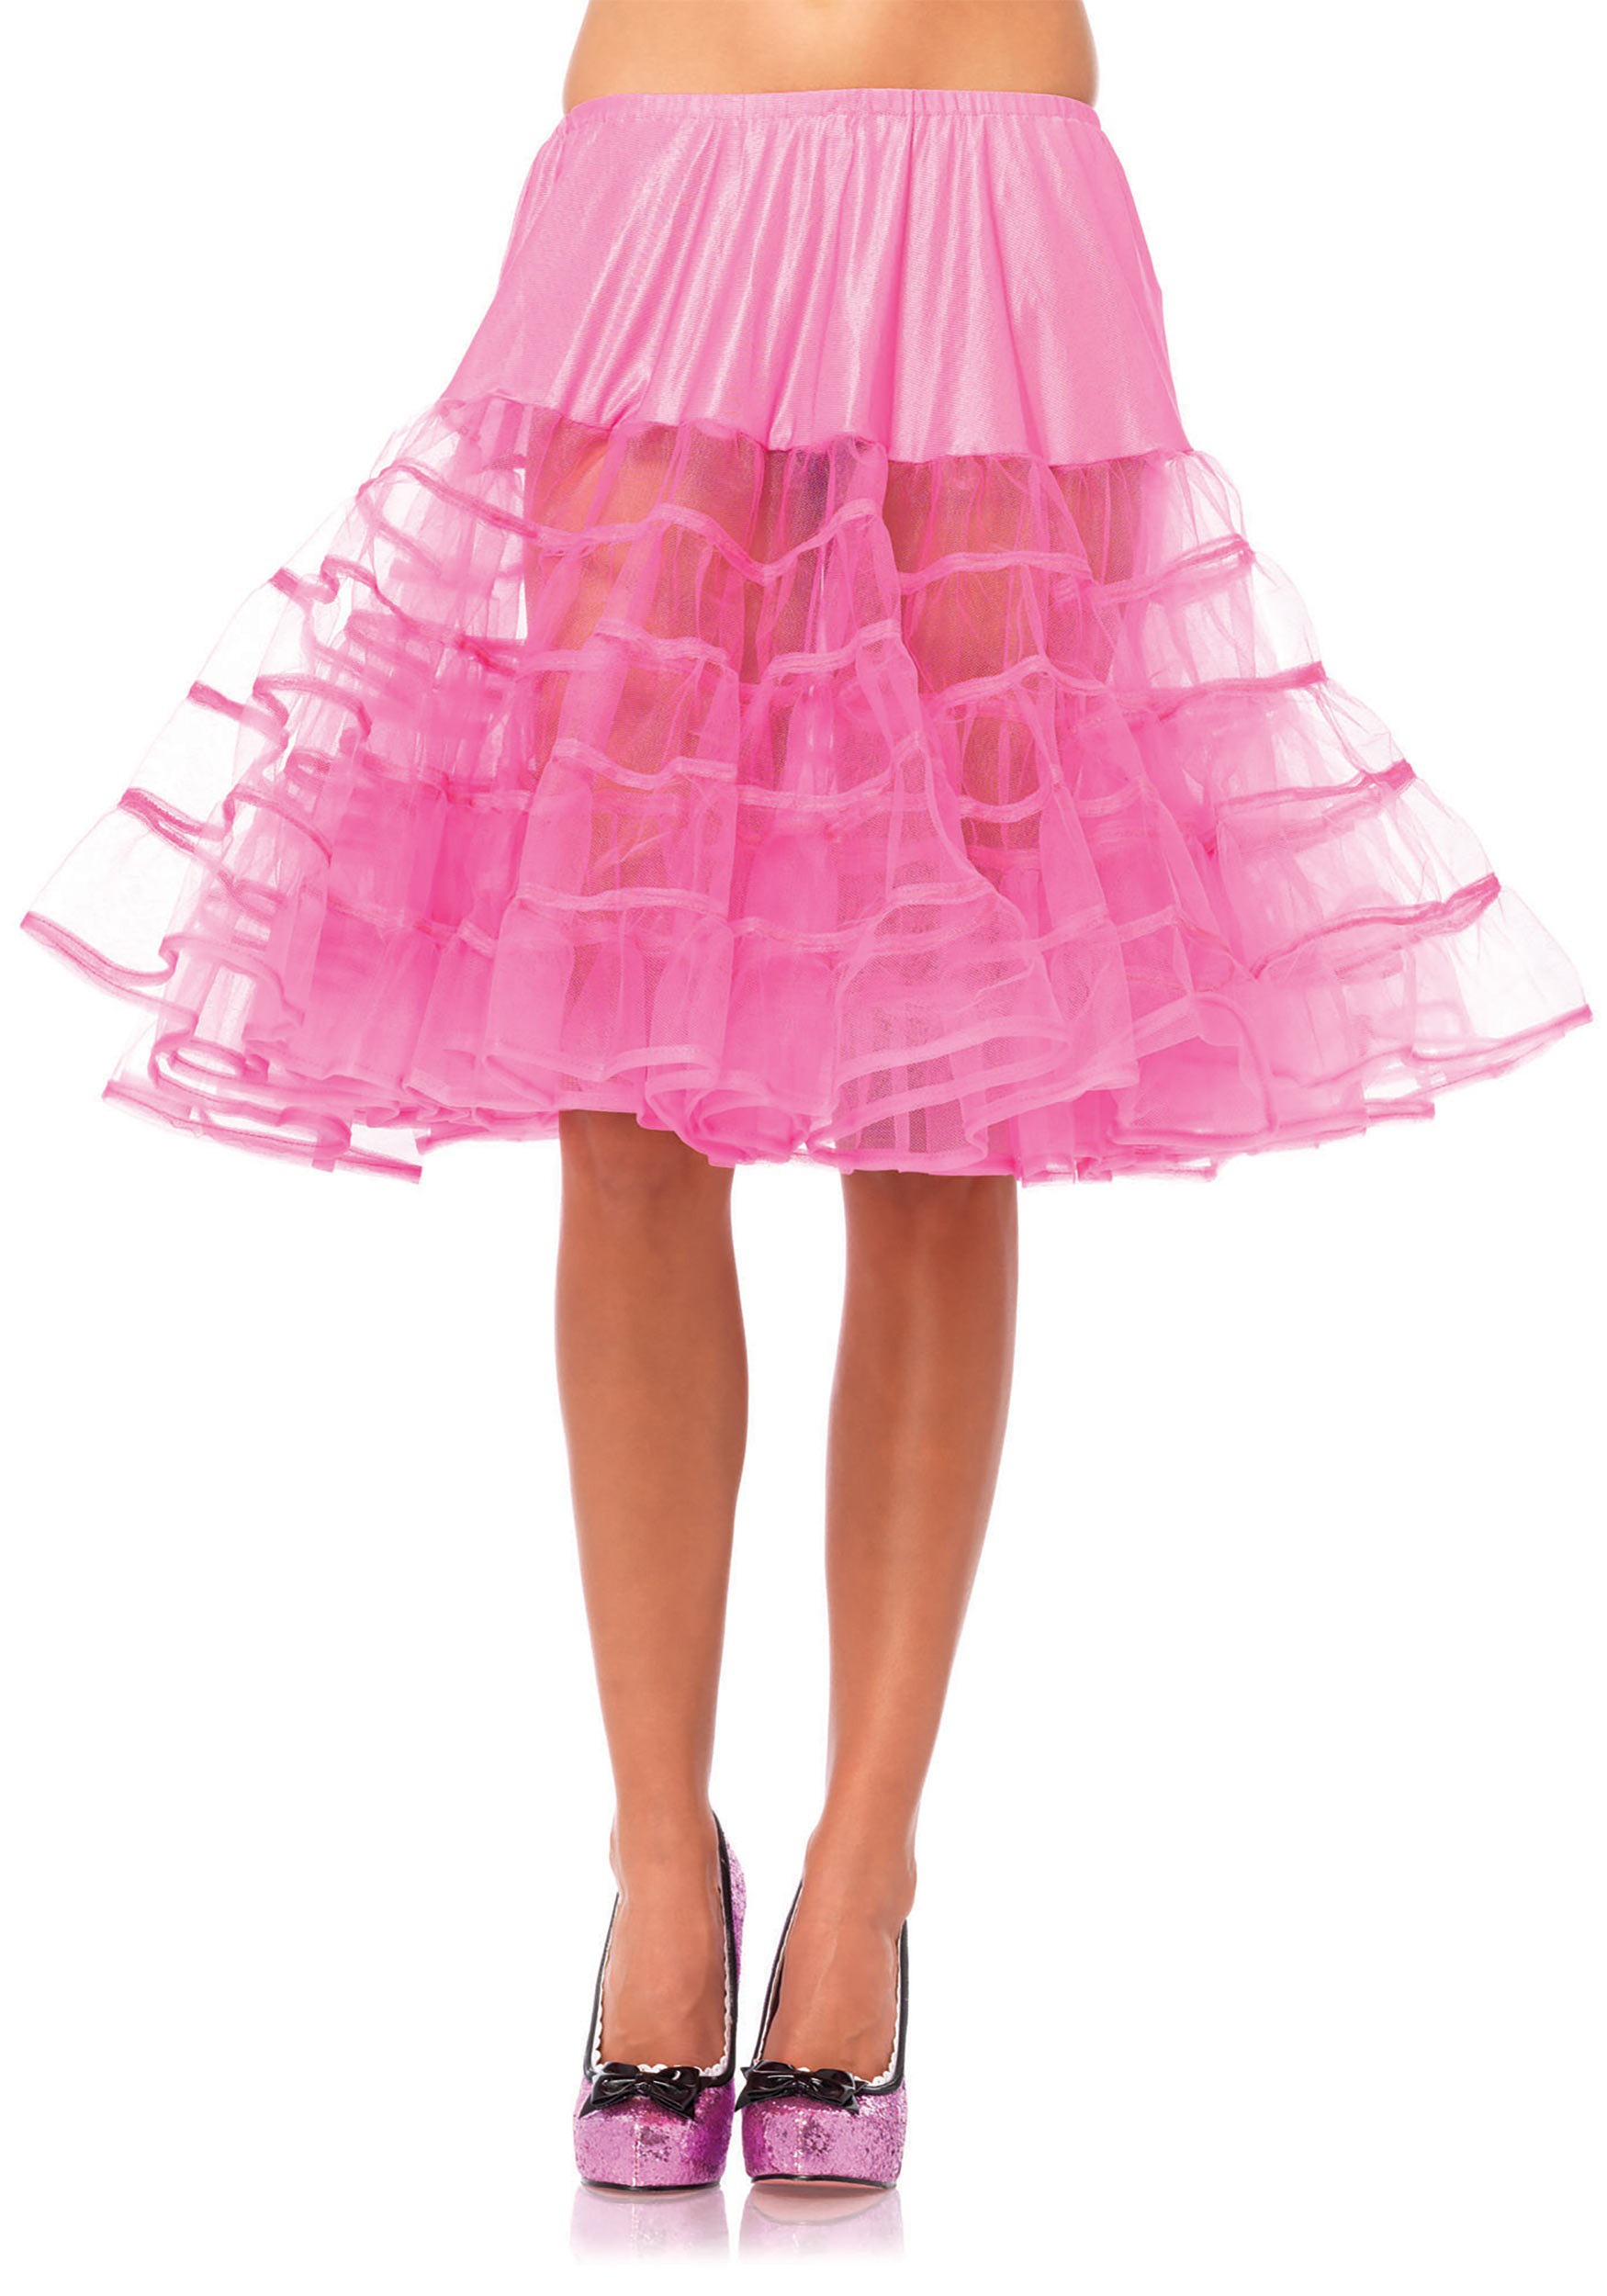 Women’s Knee Length Pink Petticoat